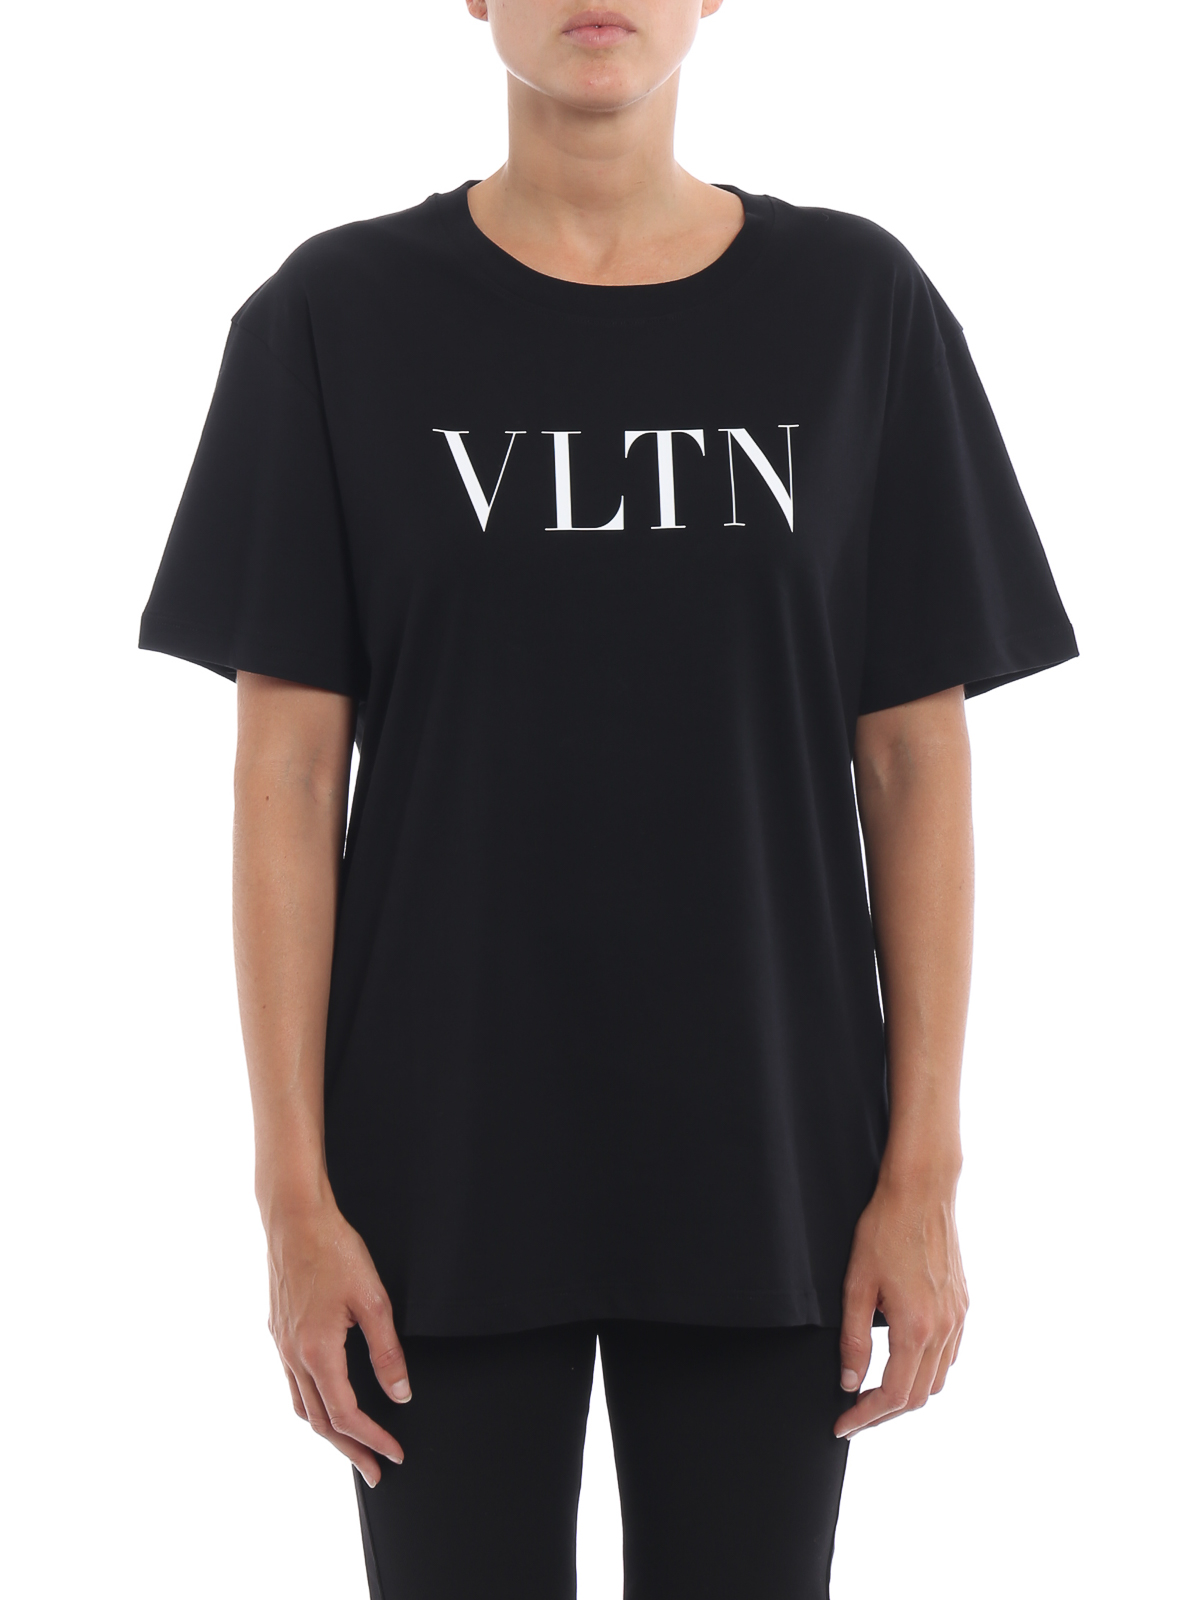 Metafor Folde Turist T-shirts Valentino - VLTN print black cotton Tee - QB3MG07D3V60NO